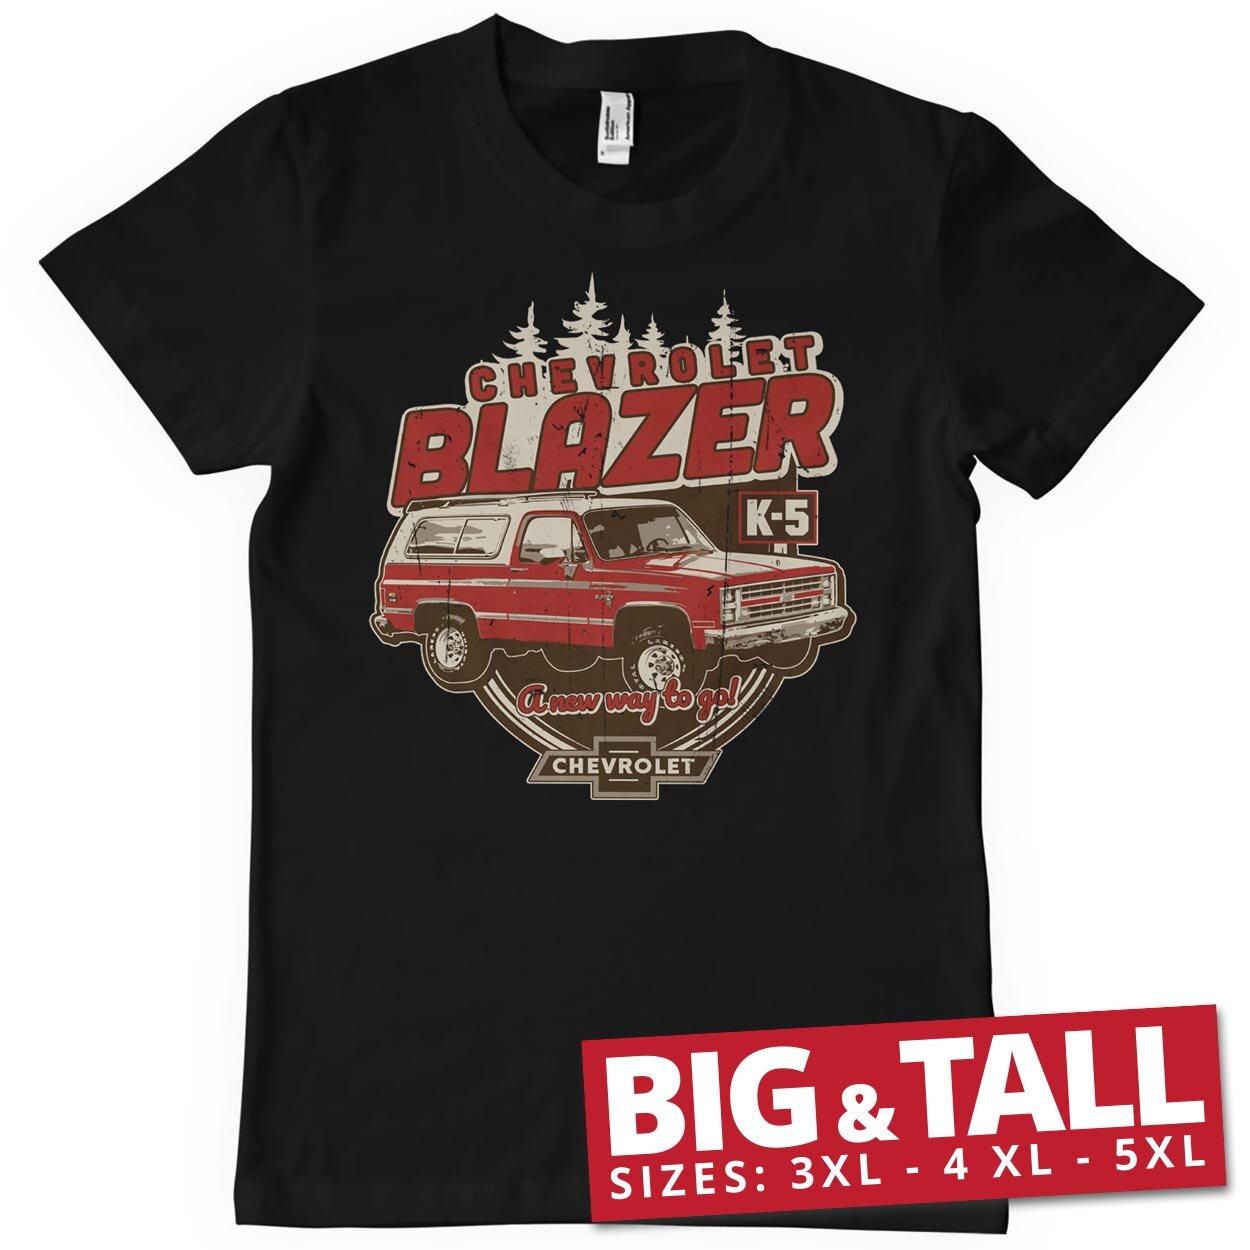 Chevrolet Blazer - A New Way To Go Big & Tall T-Shirt